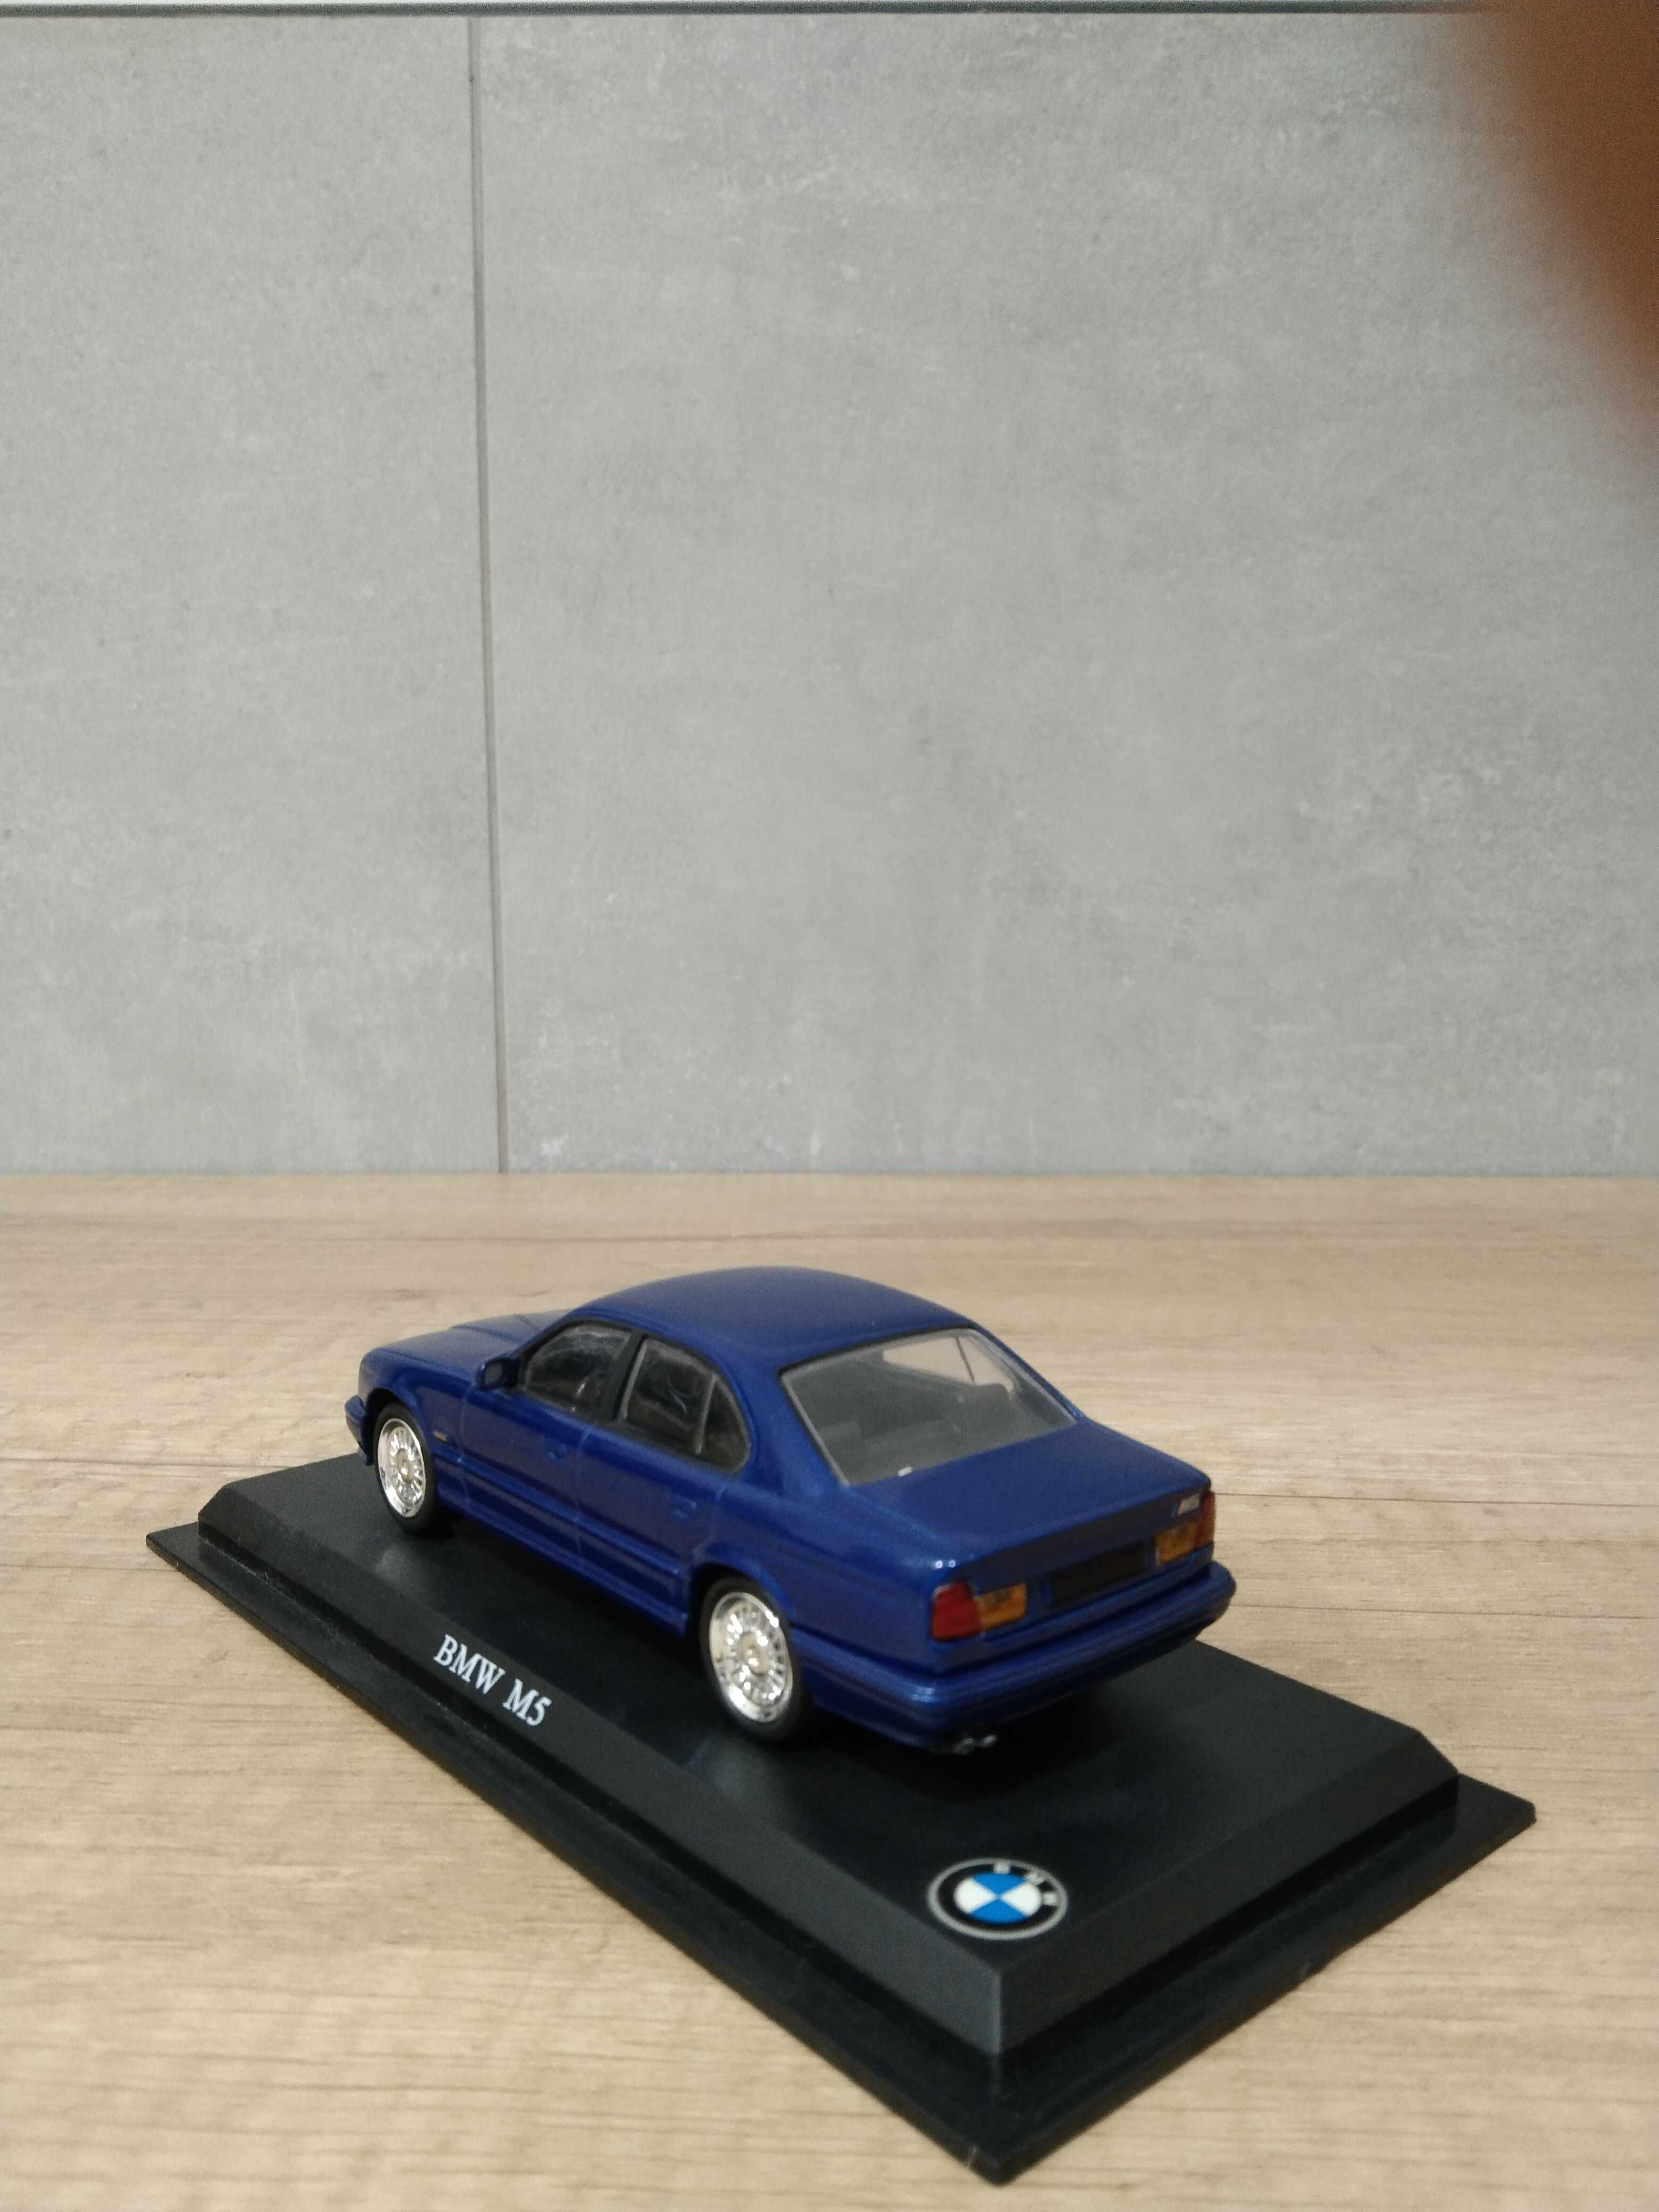 Del Prado BMW M5 E34 skala 1:43